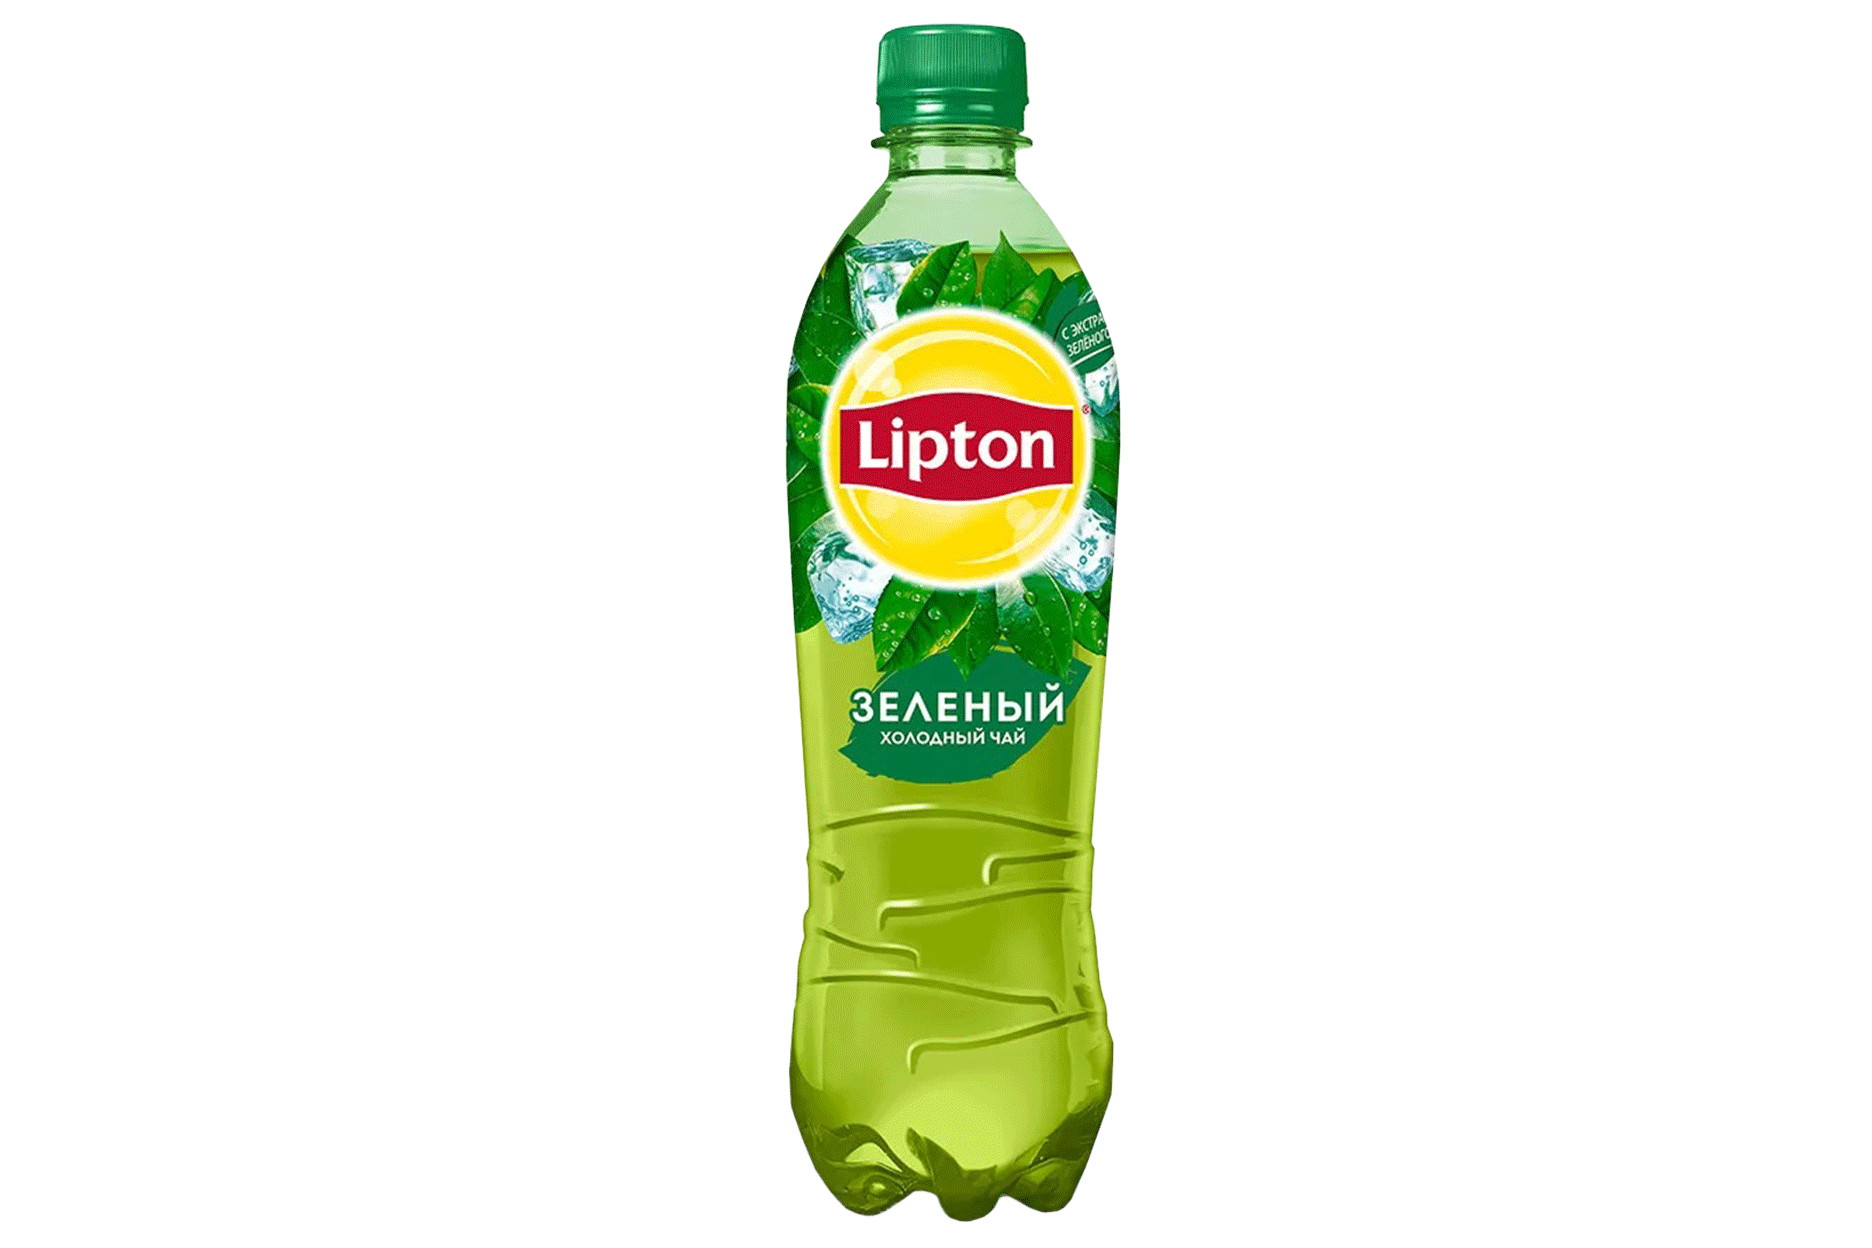 Липтон 1 литр. Чай Липтон 0.5. Липтон зеленый чай 1.5. Липтон зеленый чай 1 литр. Липтон зеленый чай 0.5.